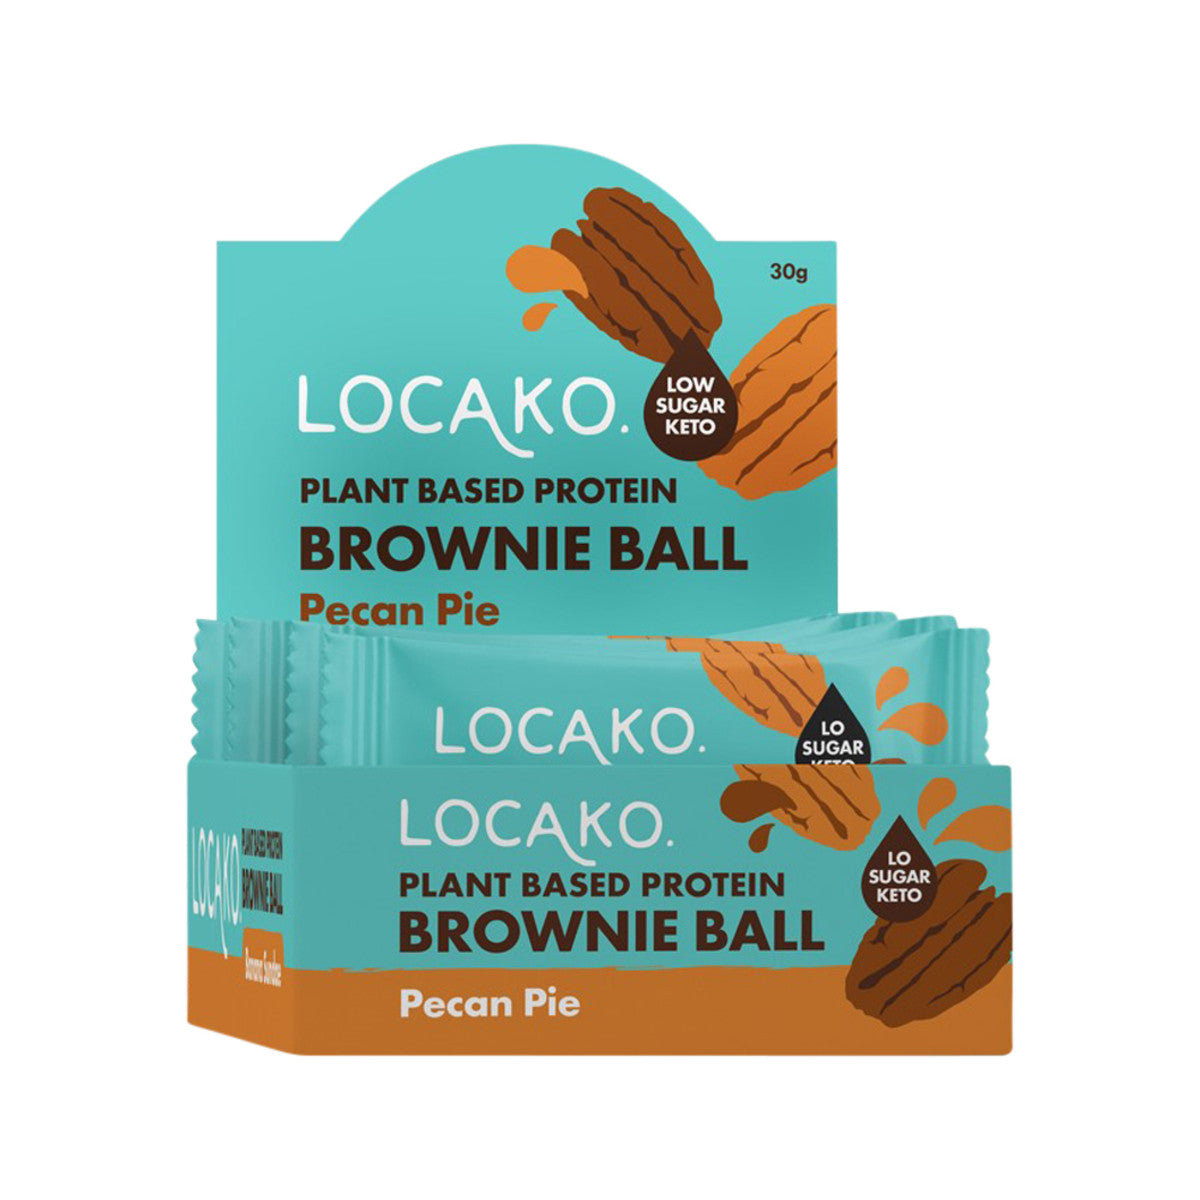 Locako Brown Ball Plant Based Prot Pecan Pie 30g x 10 Disp